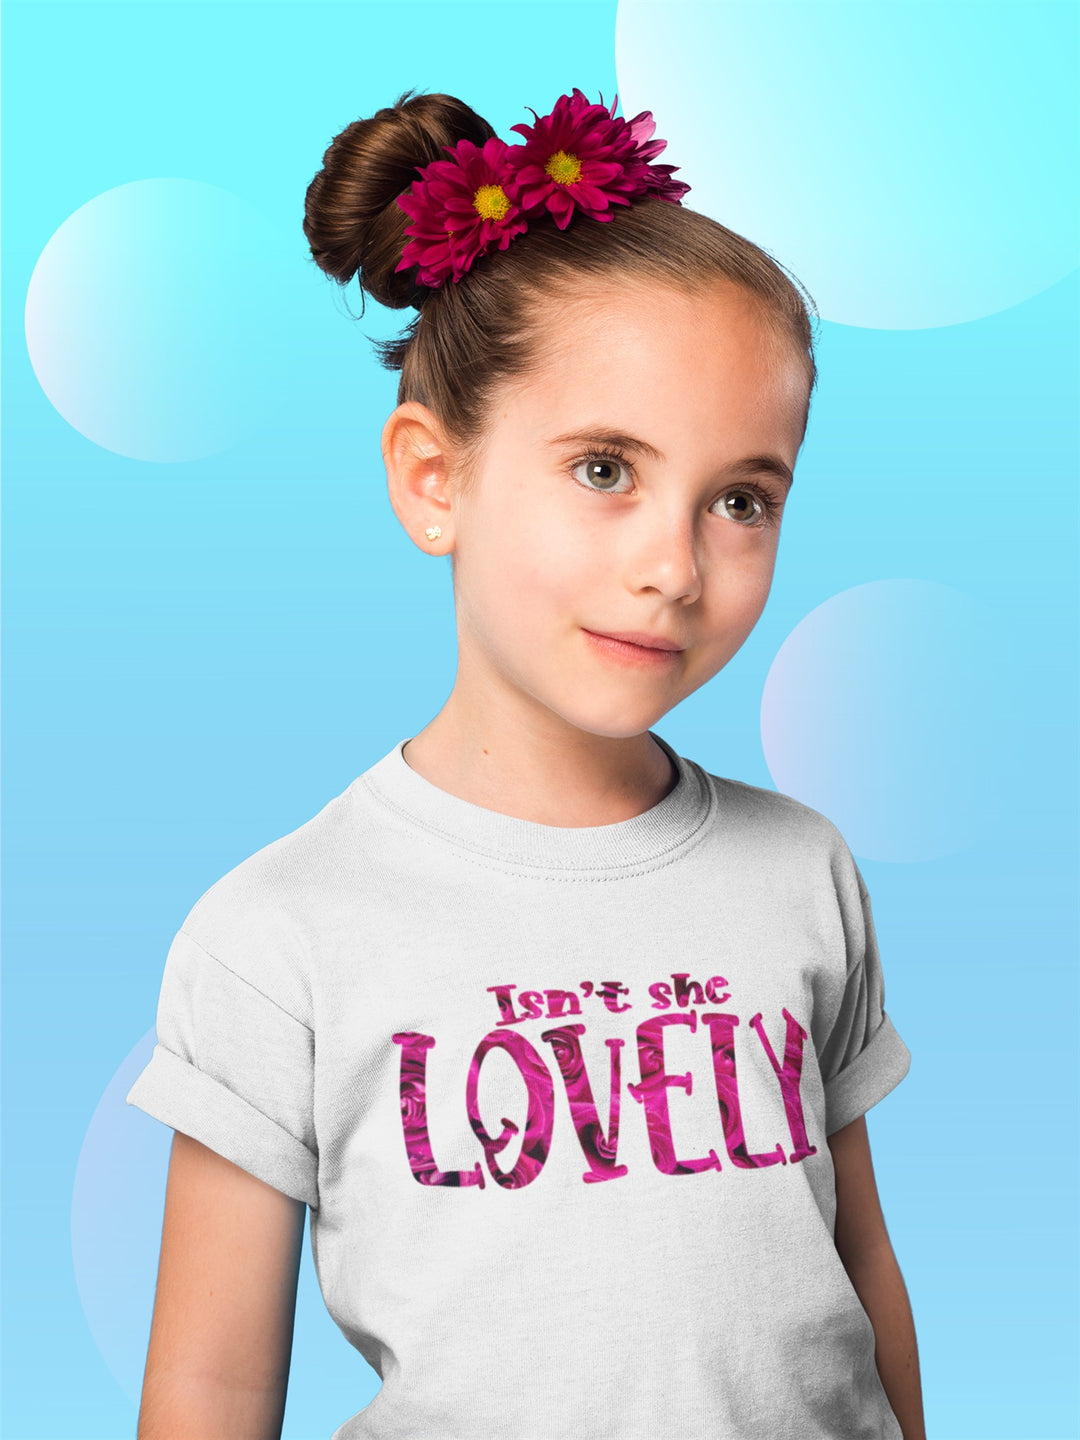 Isn't She Lovely Pink Roses. Short Sleeve T Shirt For Toddler And Kids. - TeesForToddlersandKids -  t-shirt - holidays, Love - isnt-she-lovely-pink-roses-short-sleeve-t-shirt-for-toddler-and-kids